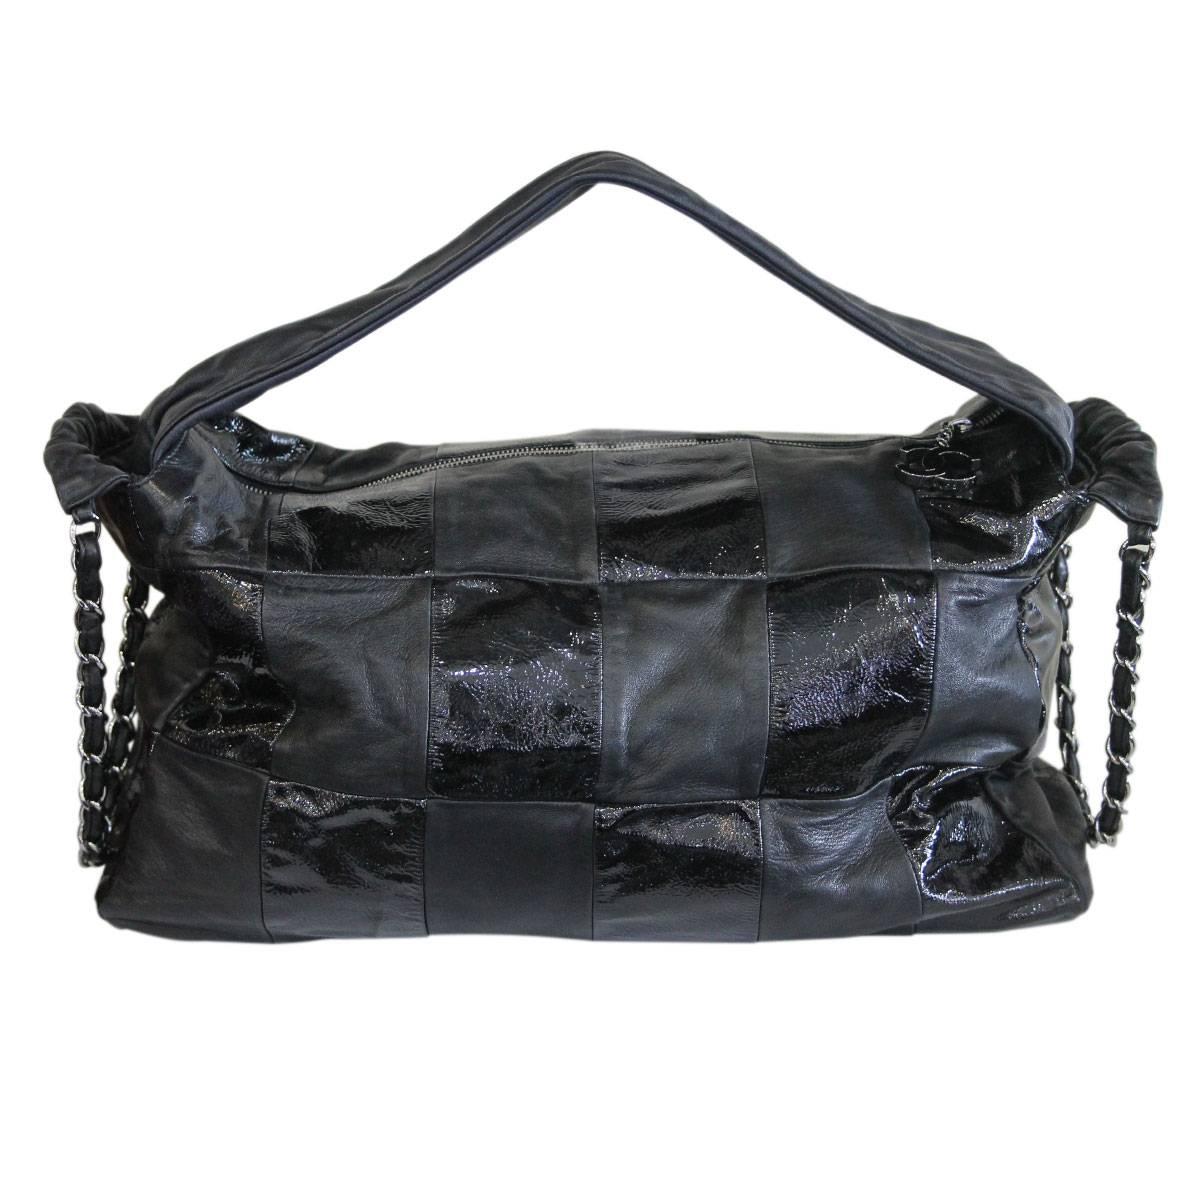 Company: Chanel
Handles: Black Lambskin Leather Hobo Strap, Drop: 7